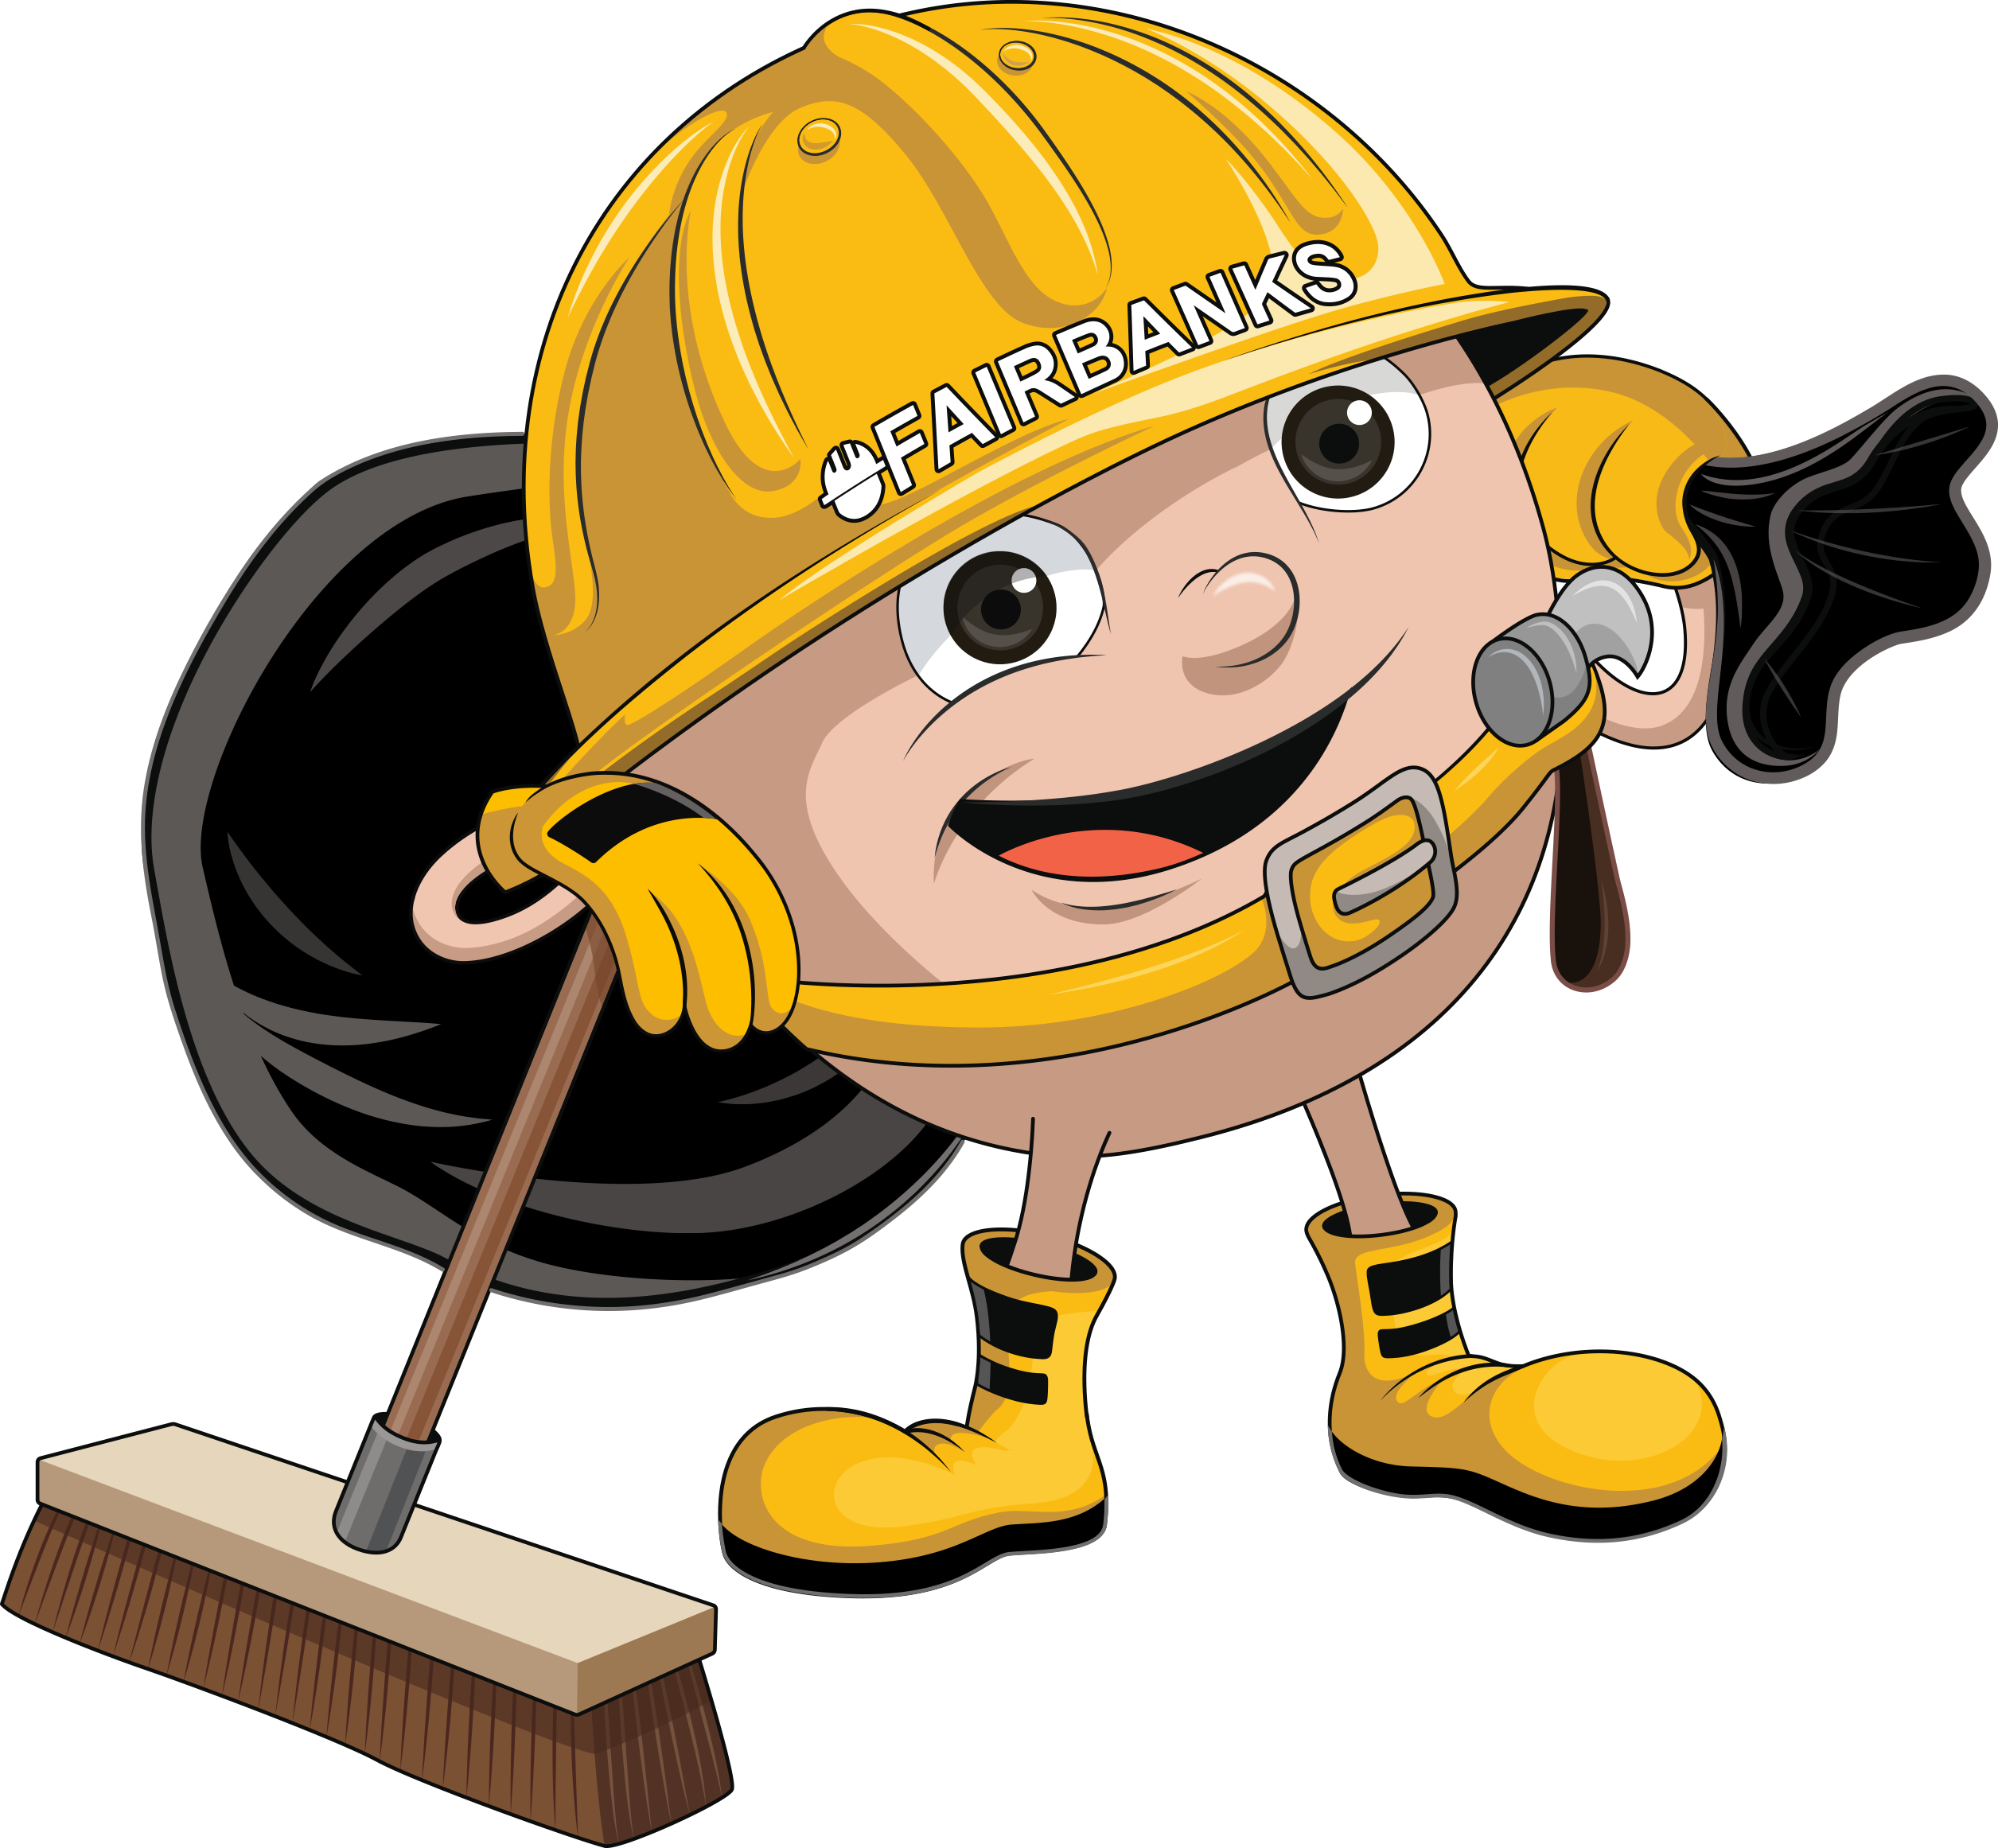 House Cleaner Liability Insurance Mascot